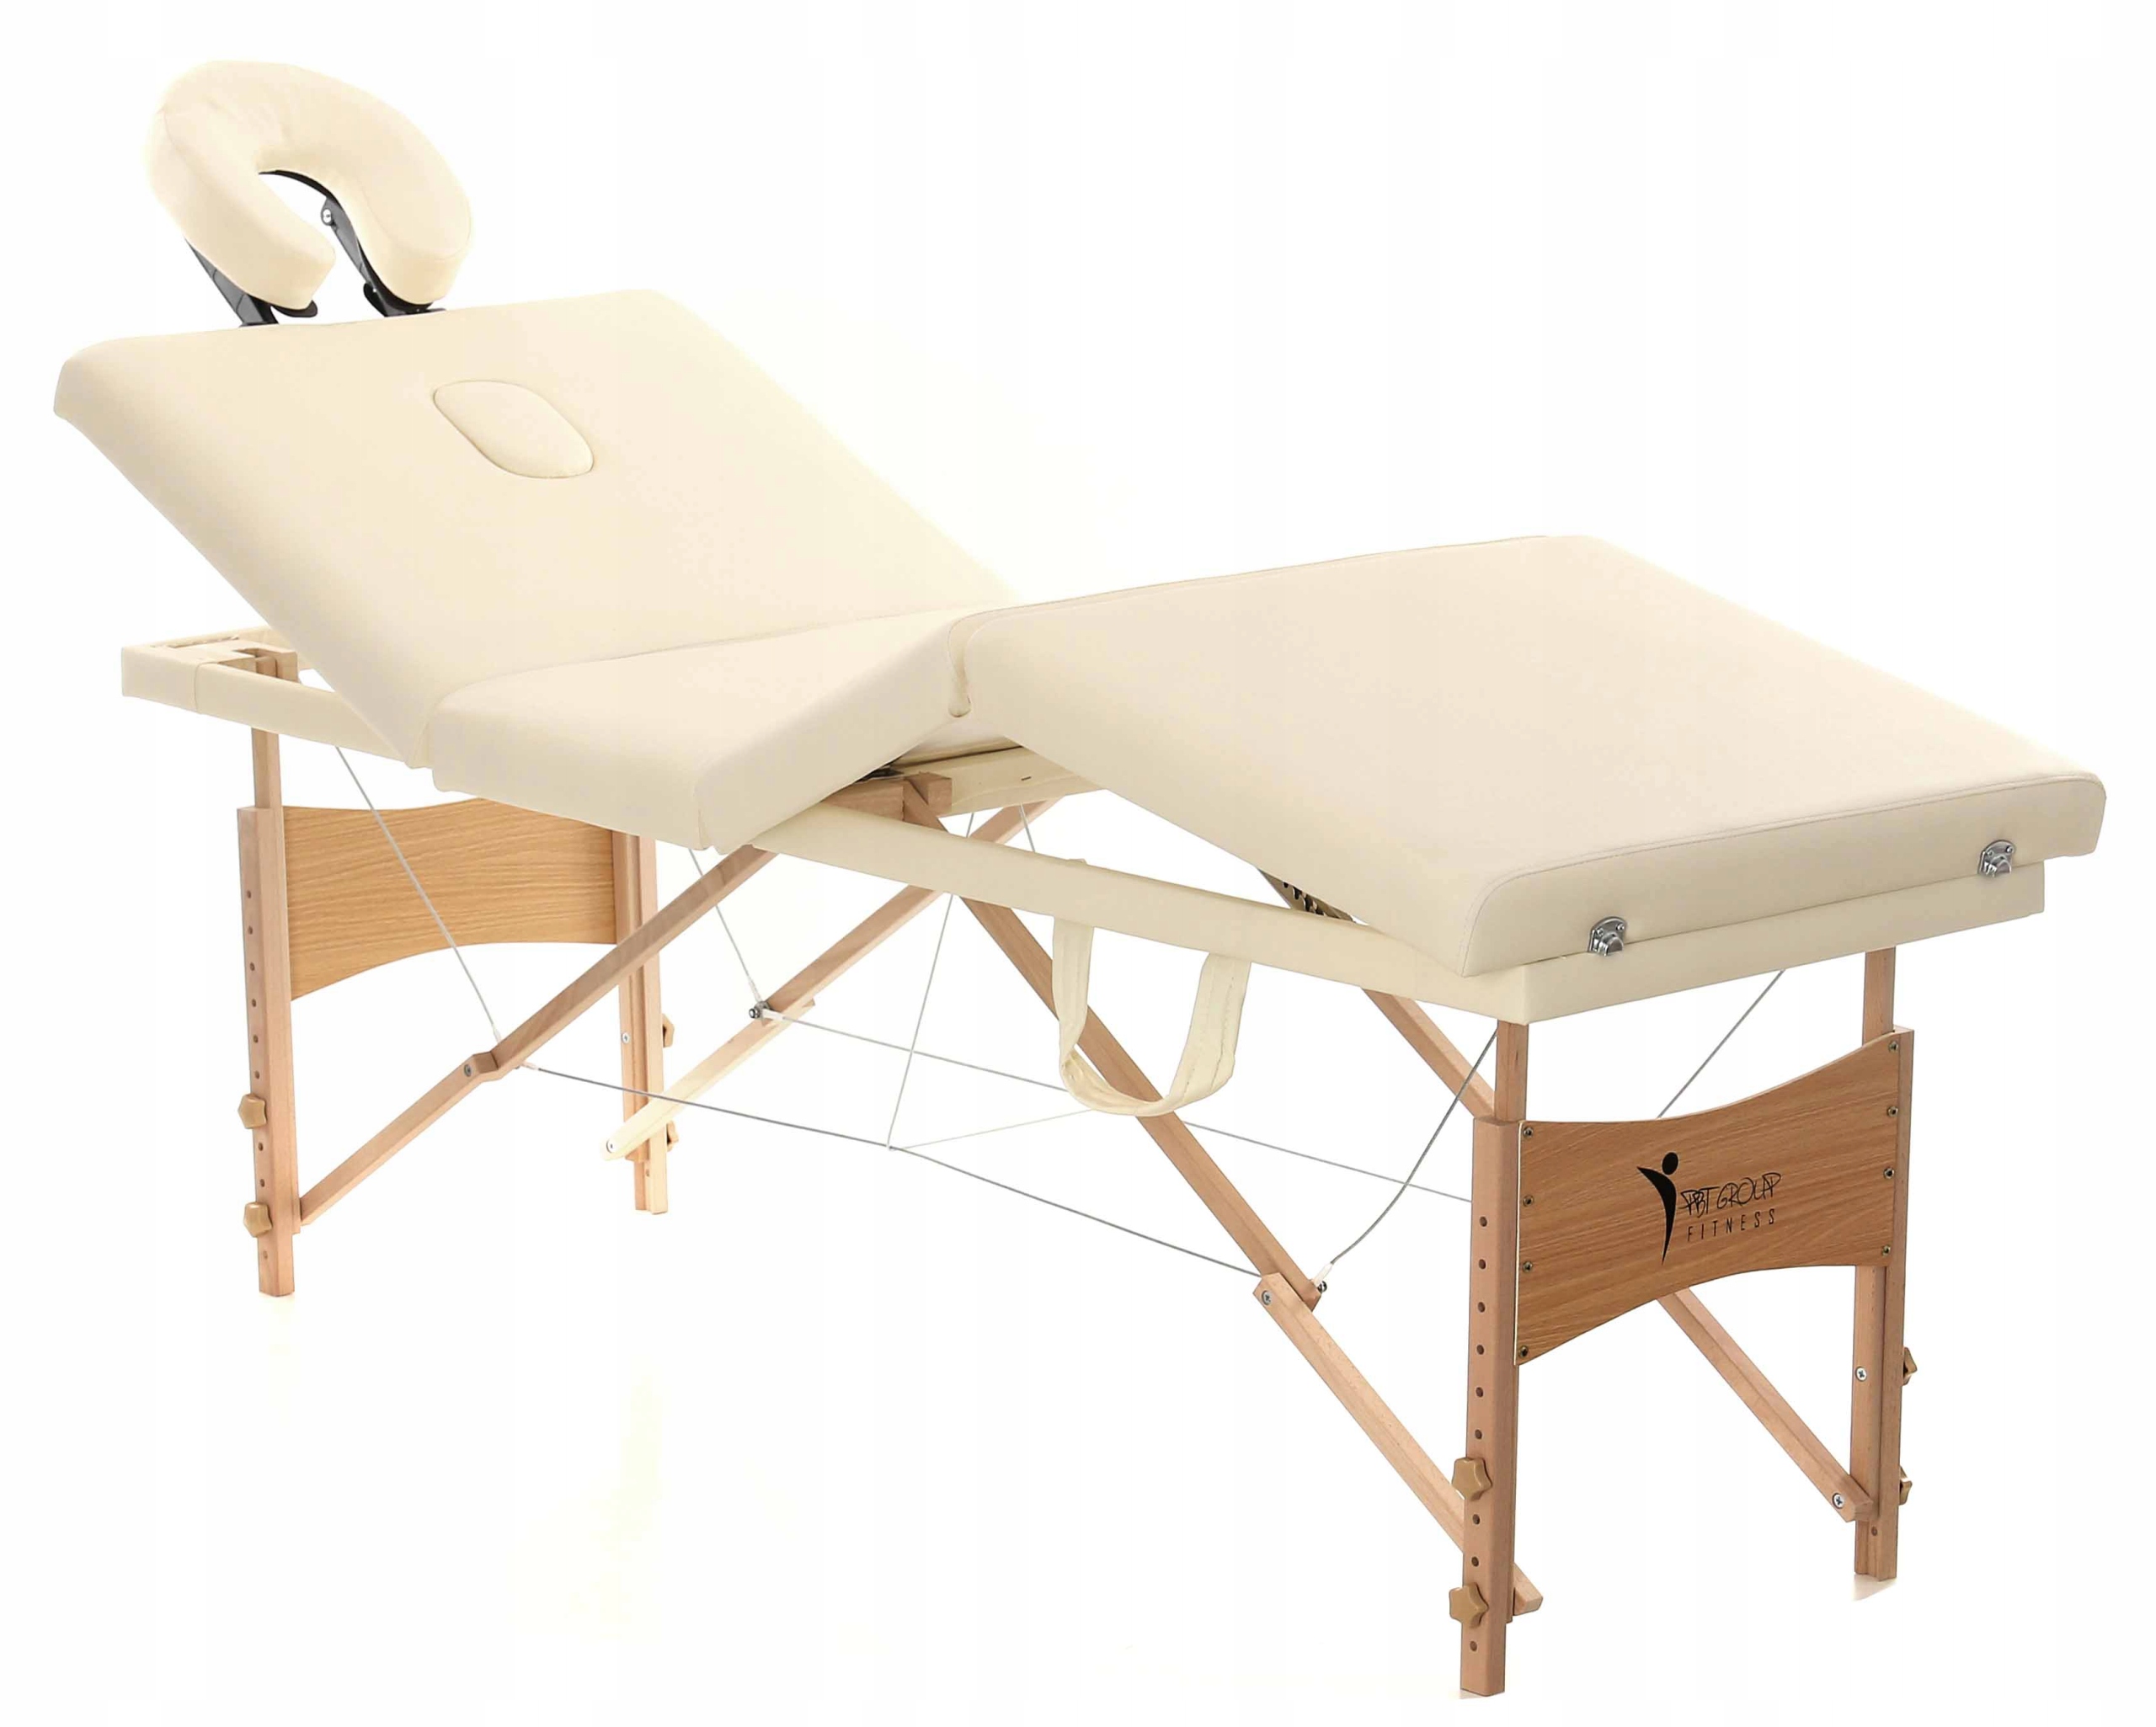 Массажный стол 3. Массажный стол. Столик для массажа. Массажный стол складной деревянный. Деревянный стол для массажа.